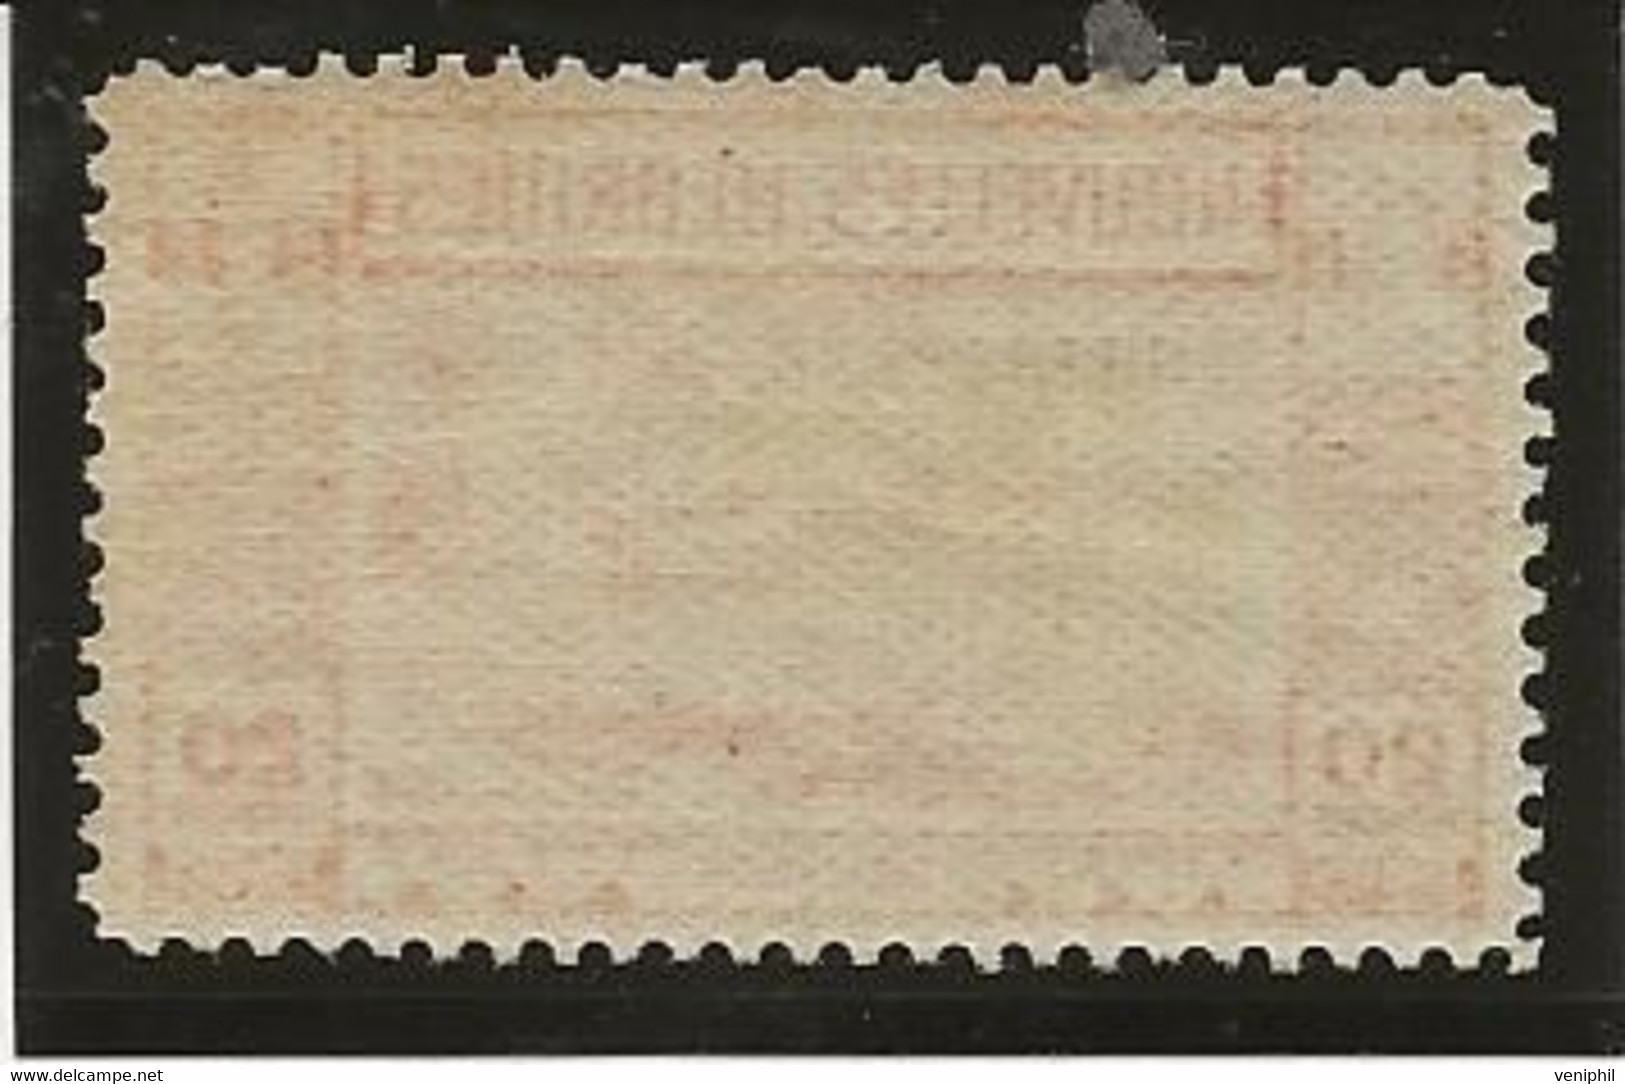 NOUVELLES - HEBRIDES -TIMBRE TAXE N° 13 NEUF SANS CHARNIERE -ANNEE 1938 - COTE : 12 € - Impuestos